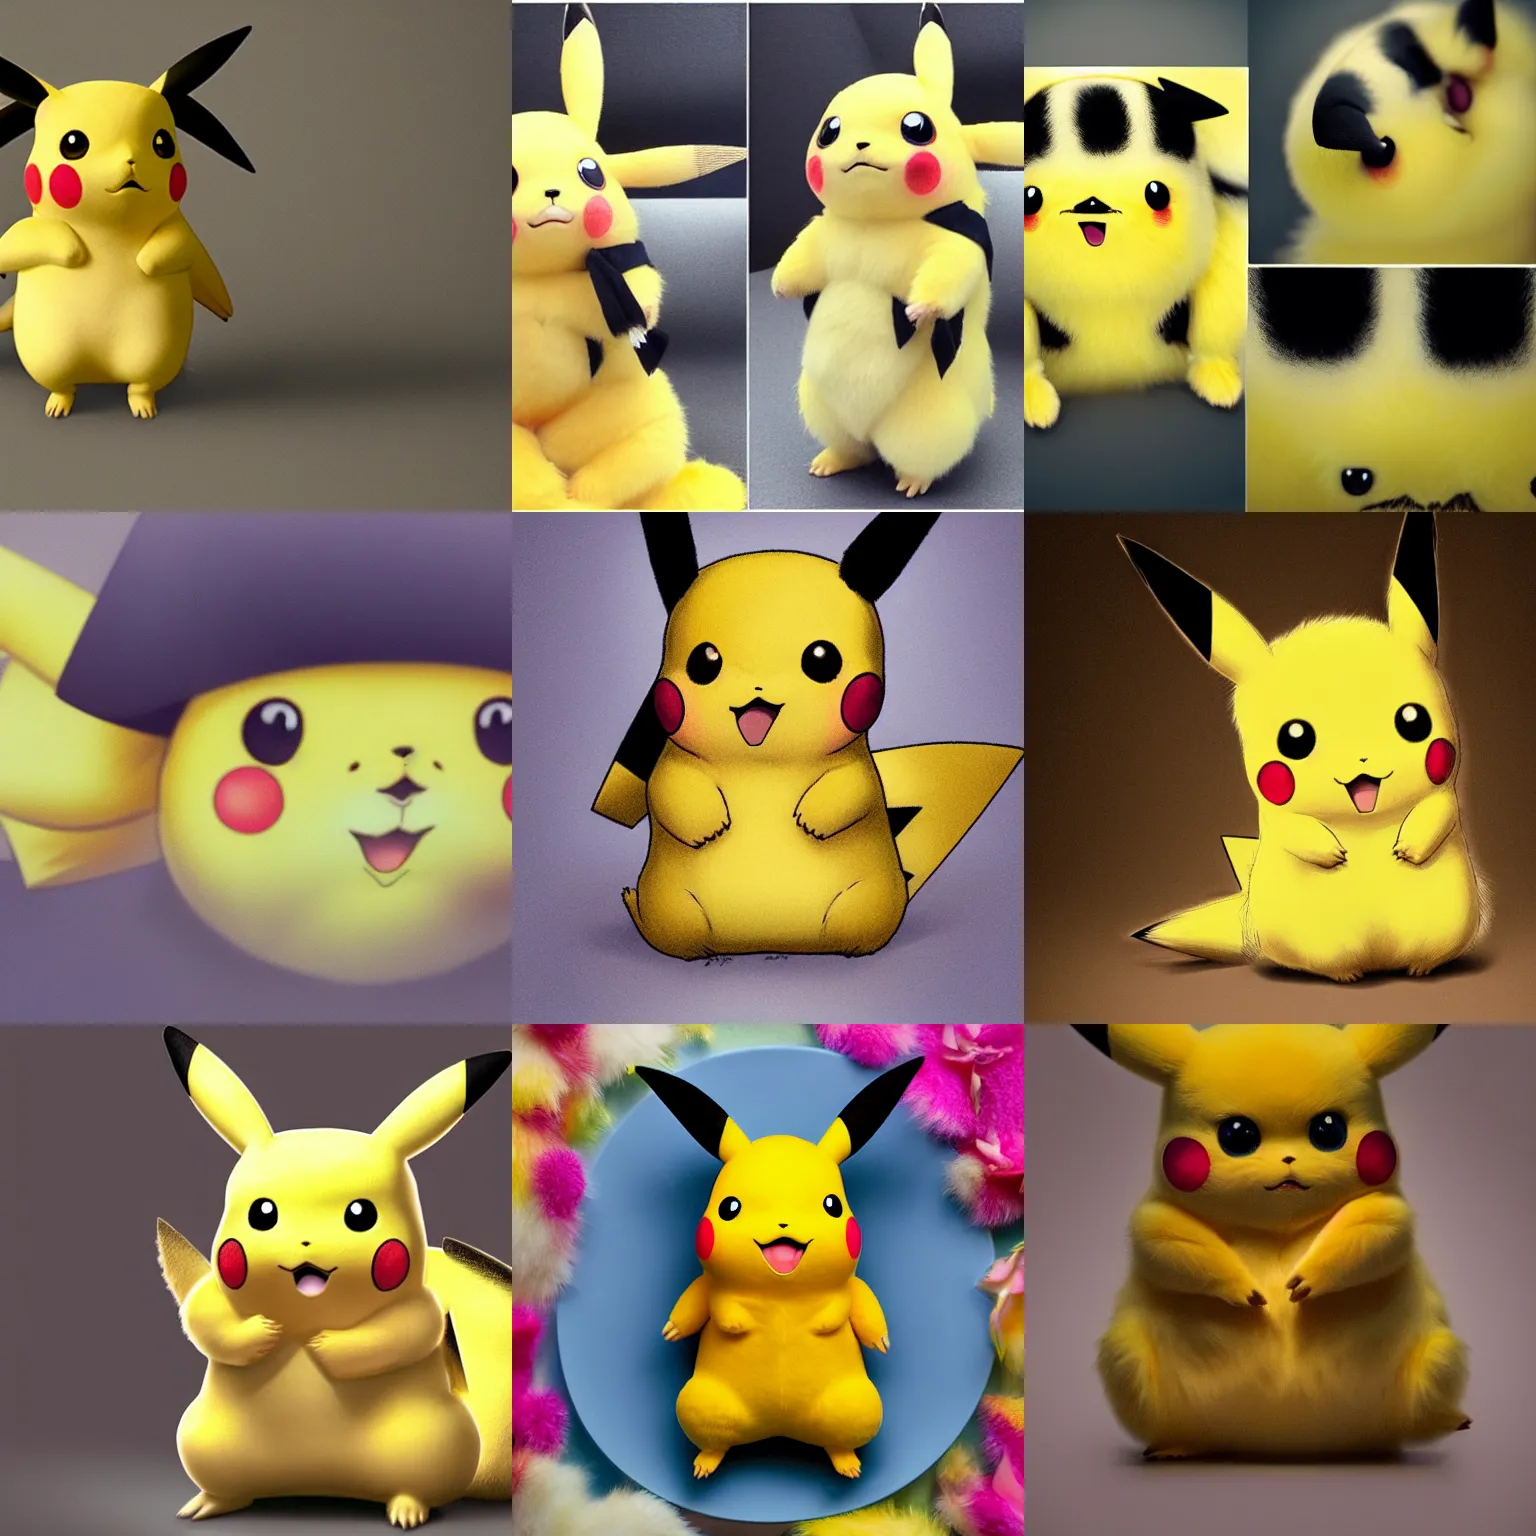 Prompt: a beautiful portrait of pikachu, studio flash photography, realistic, cute, fluffy, kawaii